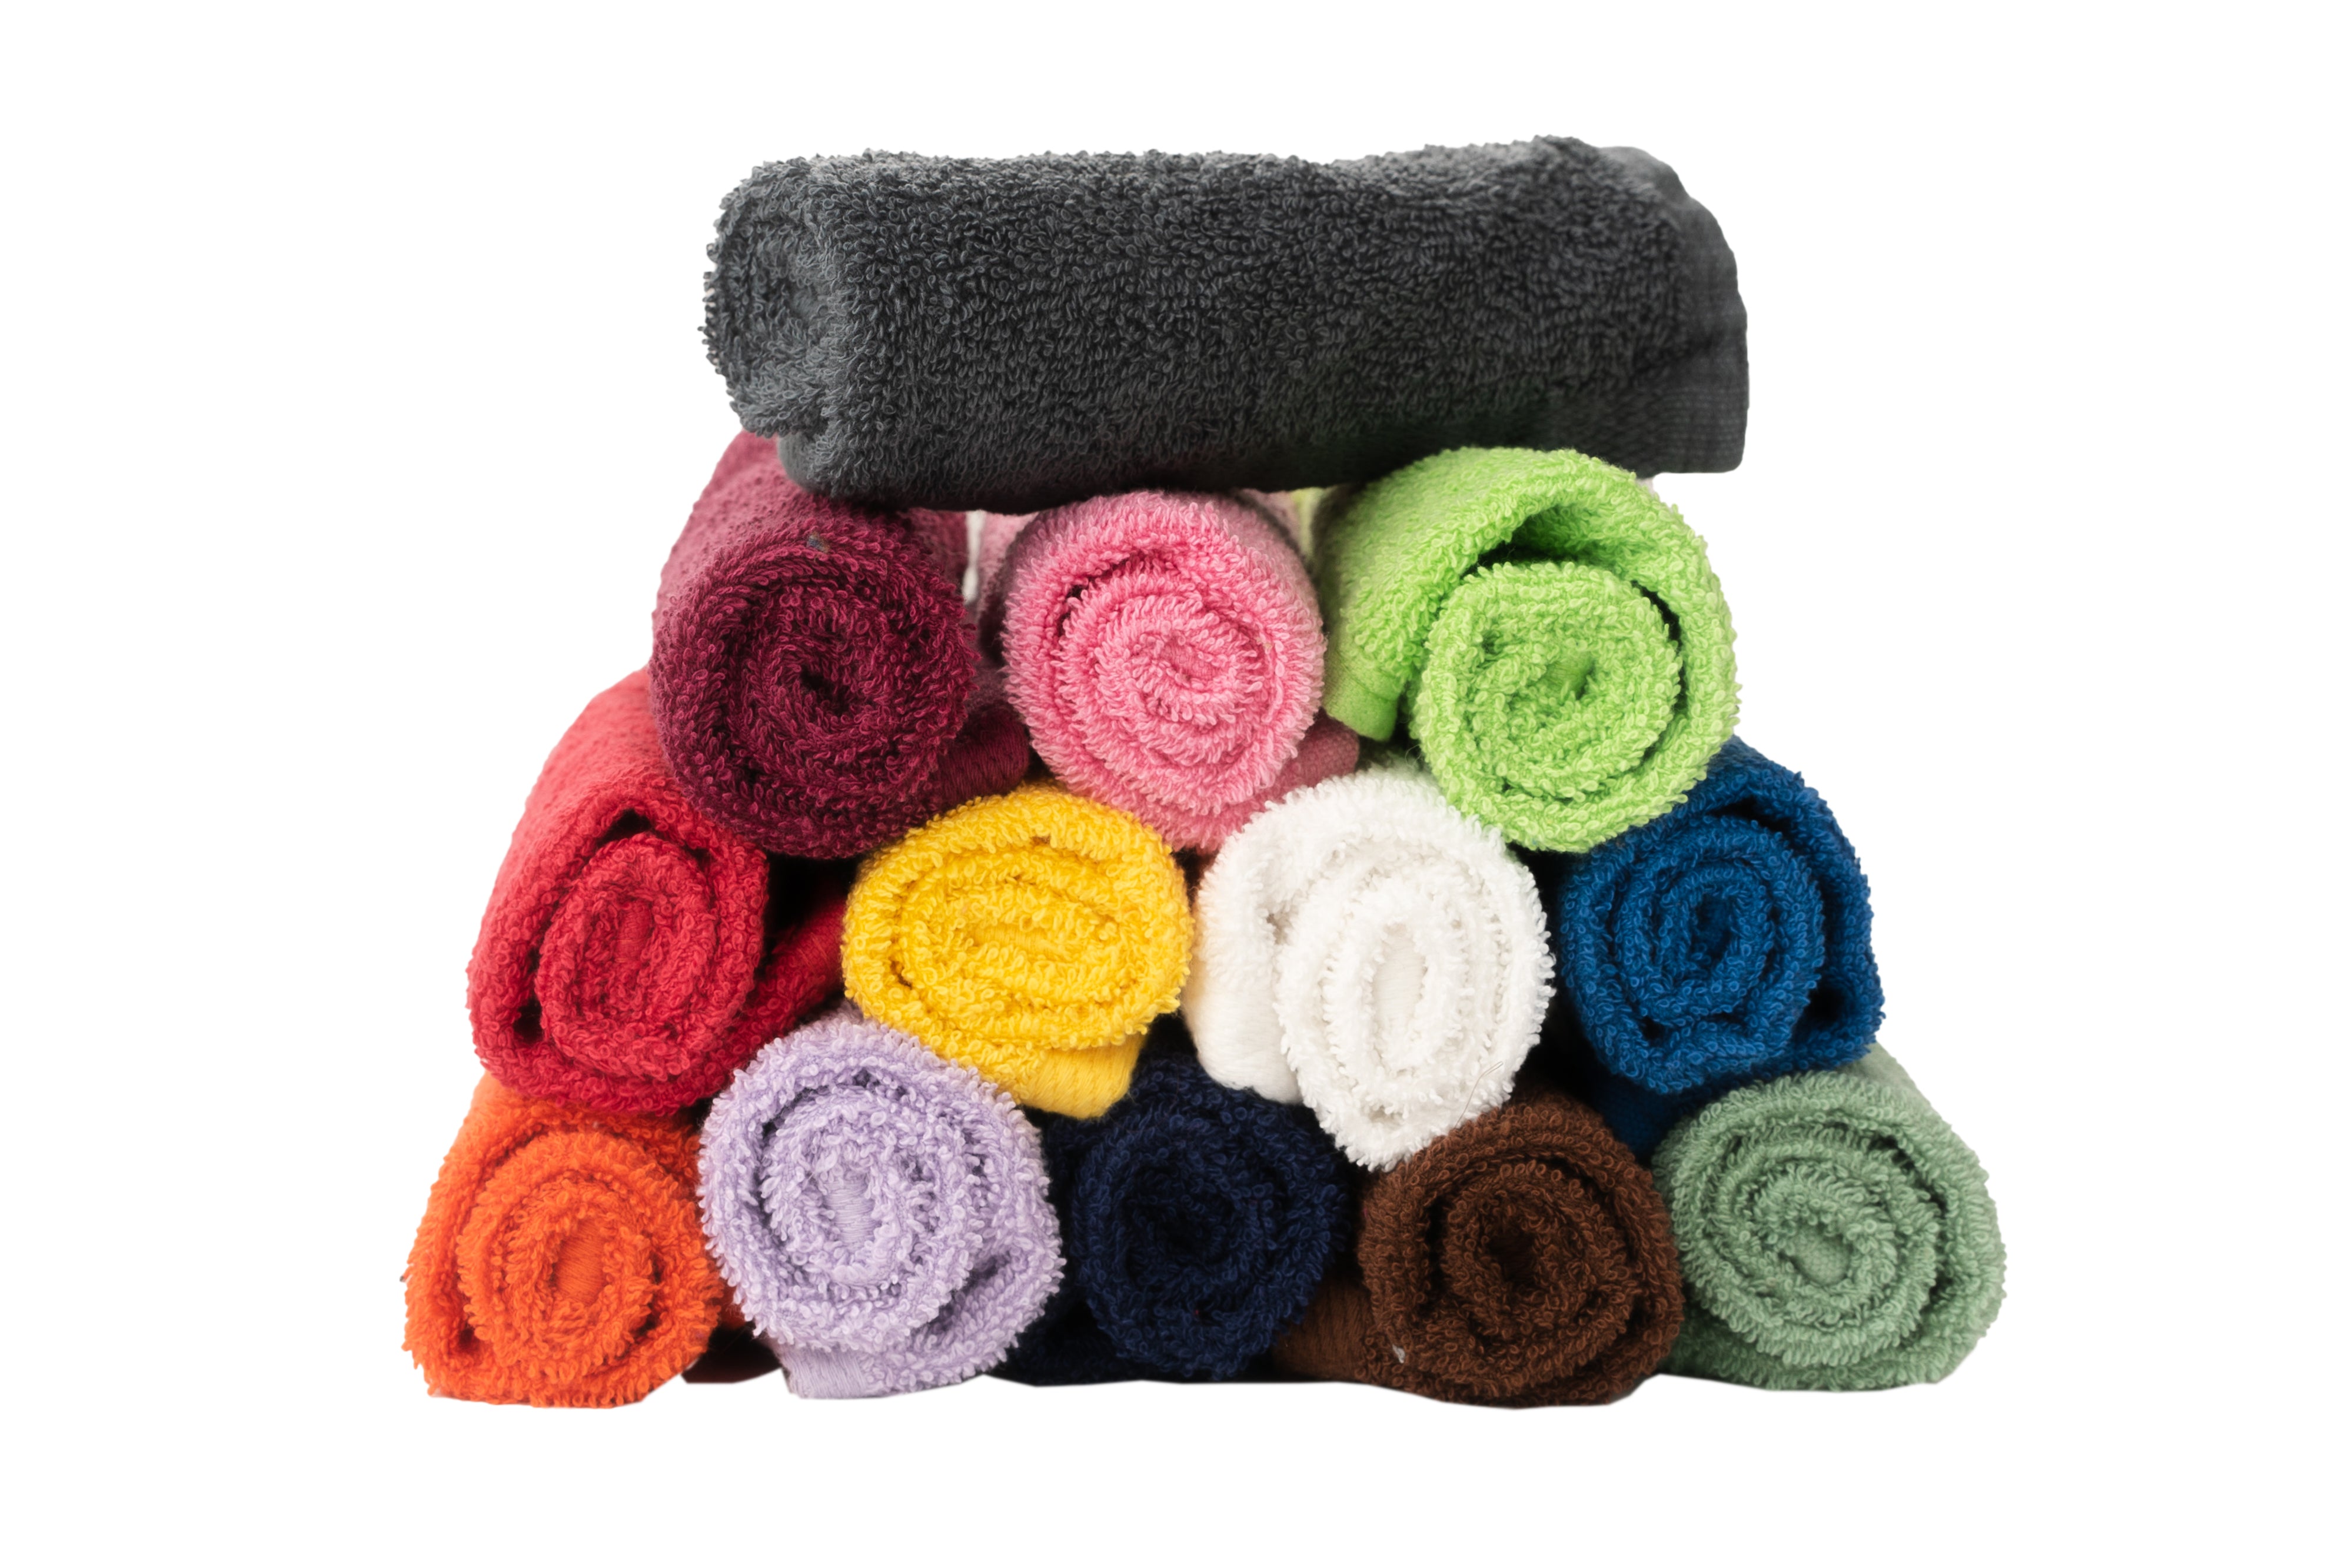 Partex Supreme 12 x 12 White Towels – Towel Emporium